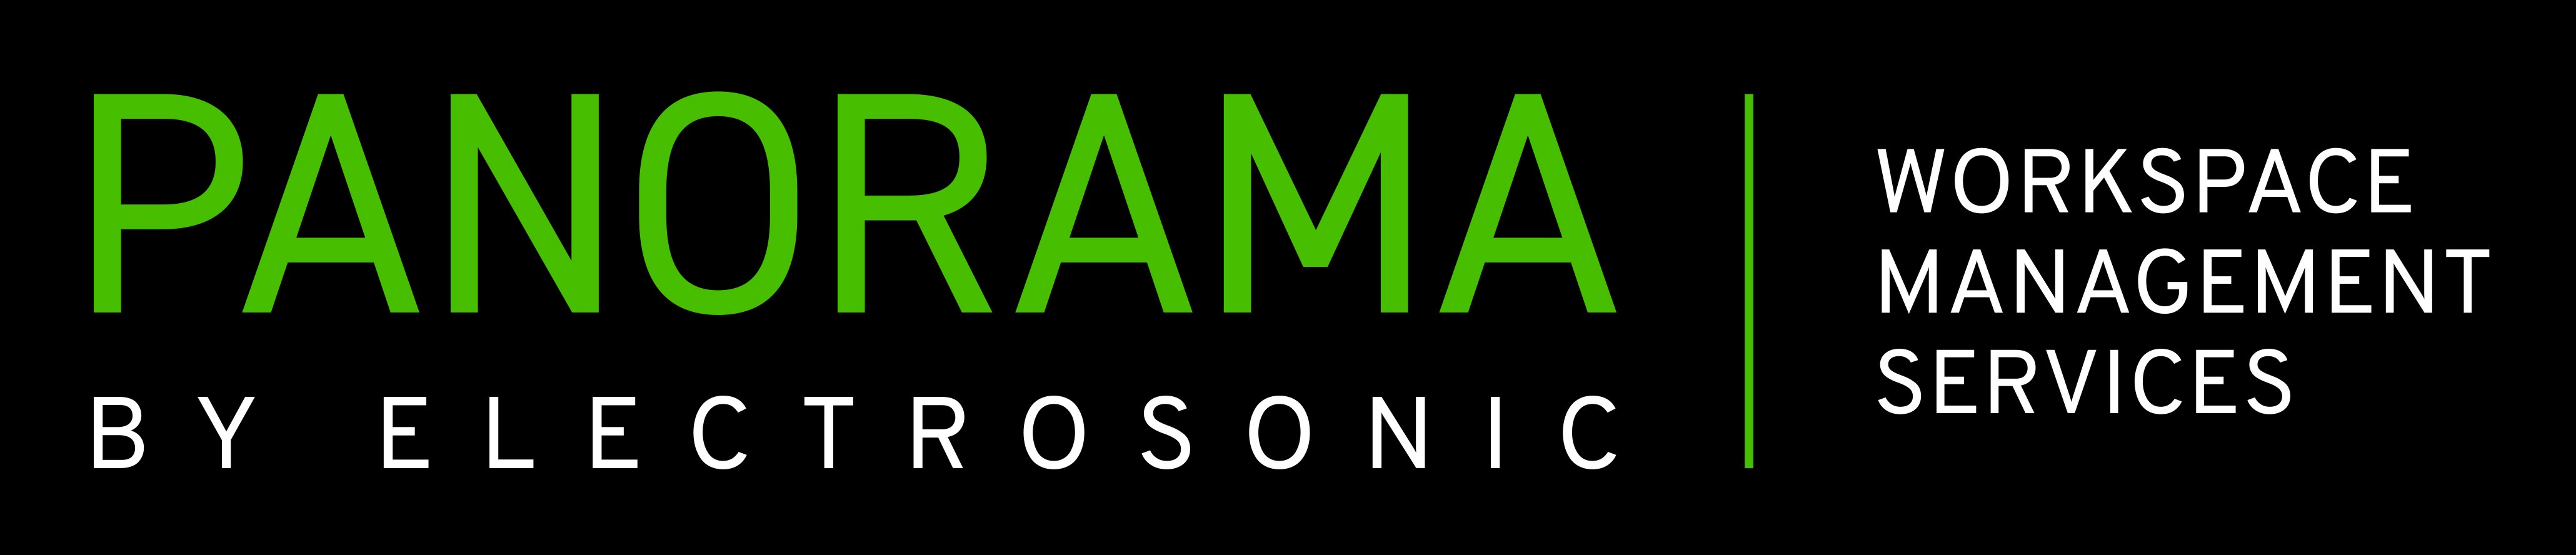 Electrosonic_Panorama_Logo_RGB_Neg